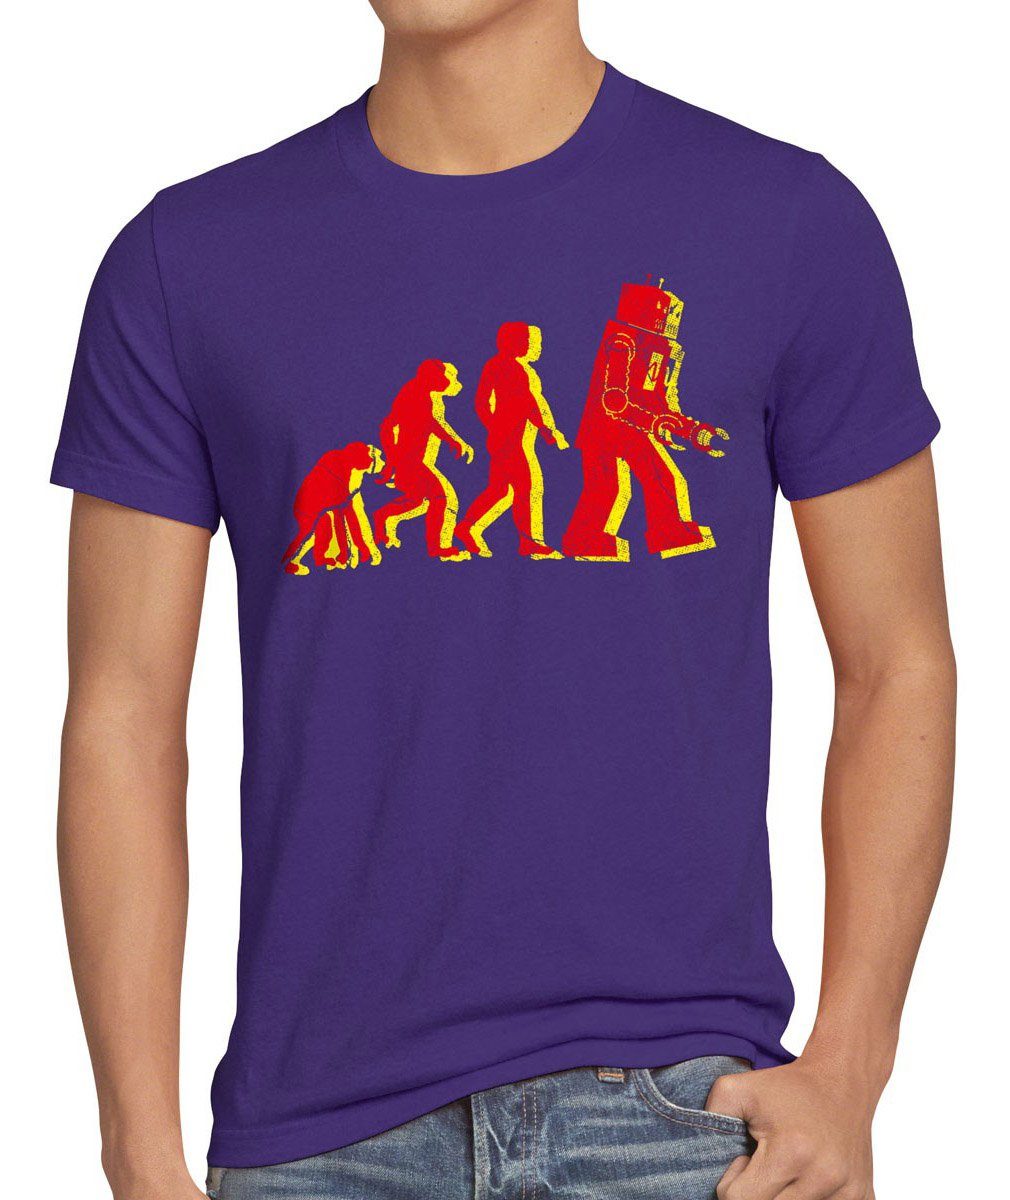 style3 Print-Shirt Herren T-Shirt Evolution big bang roboter sheldon theory cooper darwin neu robot lila